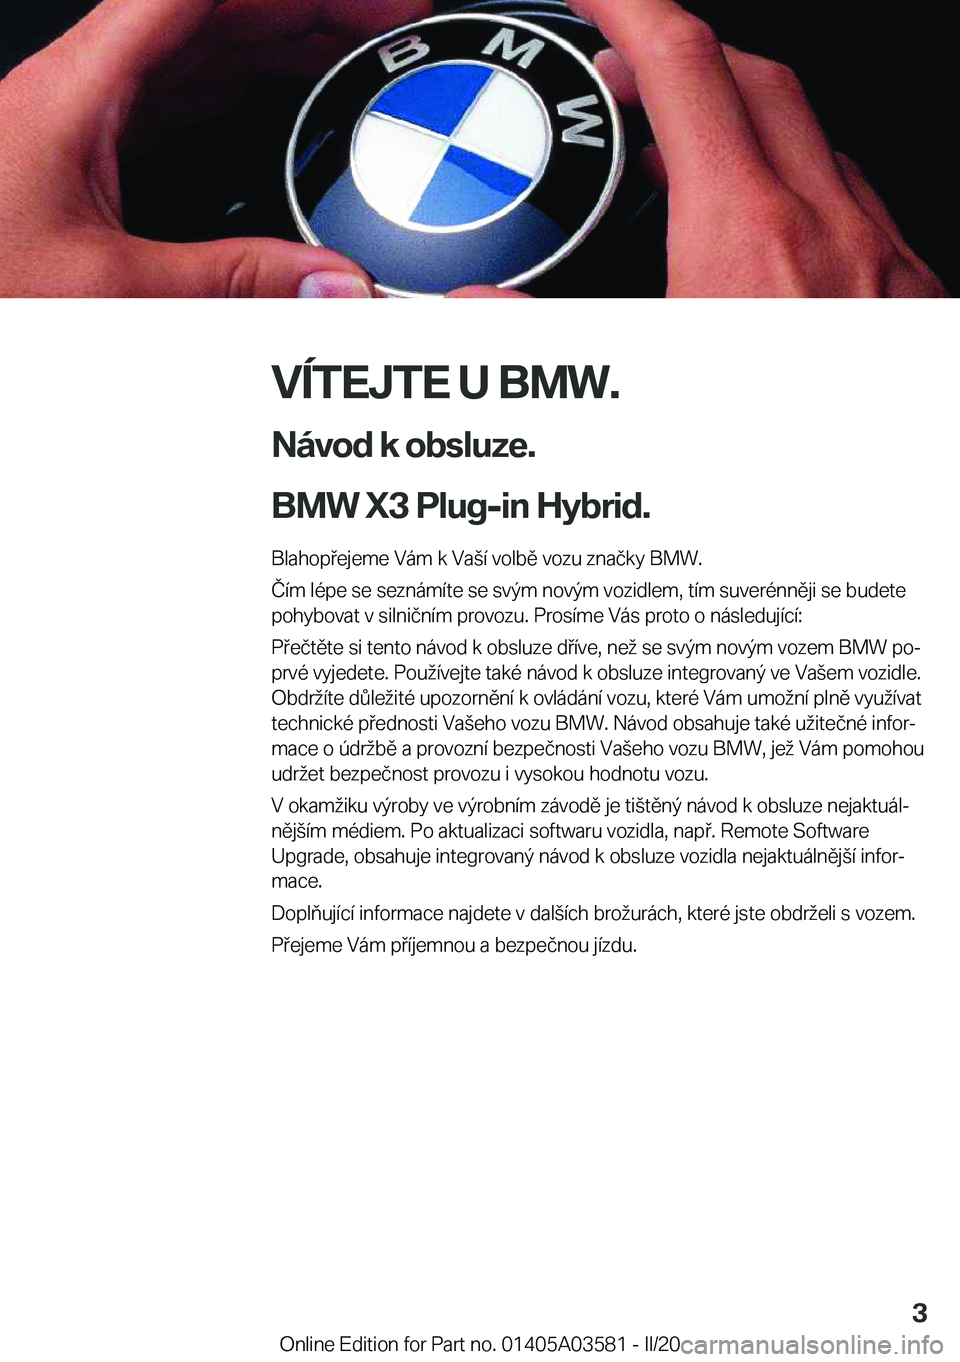 BMW X3 PLUG IN HYBRID 2020  Návod na použití (in Czech) �V�